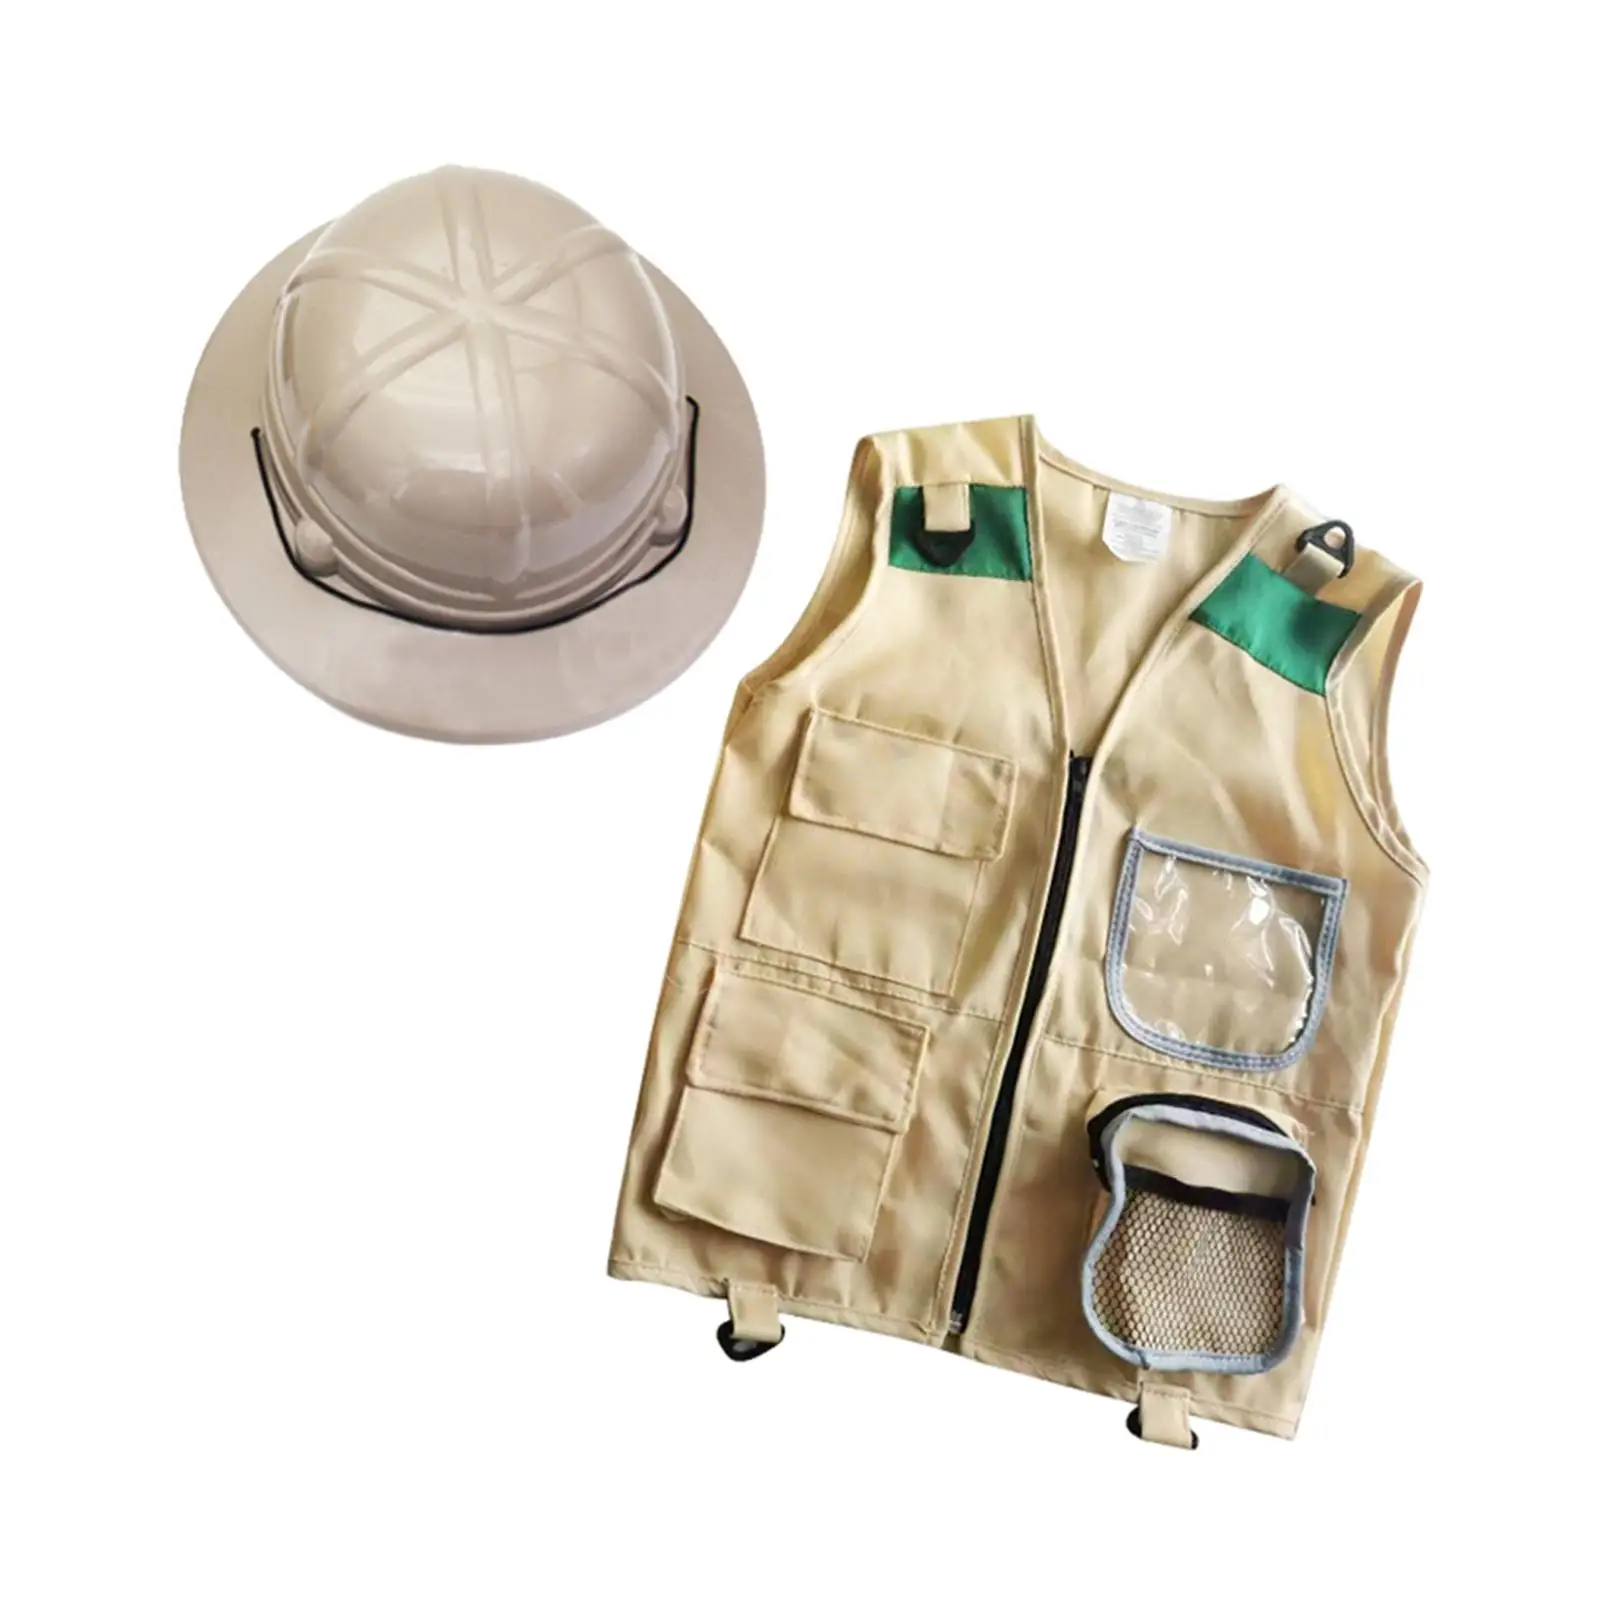 Explorer Kit Pretend Play Dress up for Boys Toddlers Halloween Gift